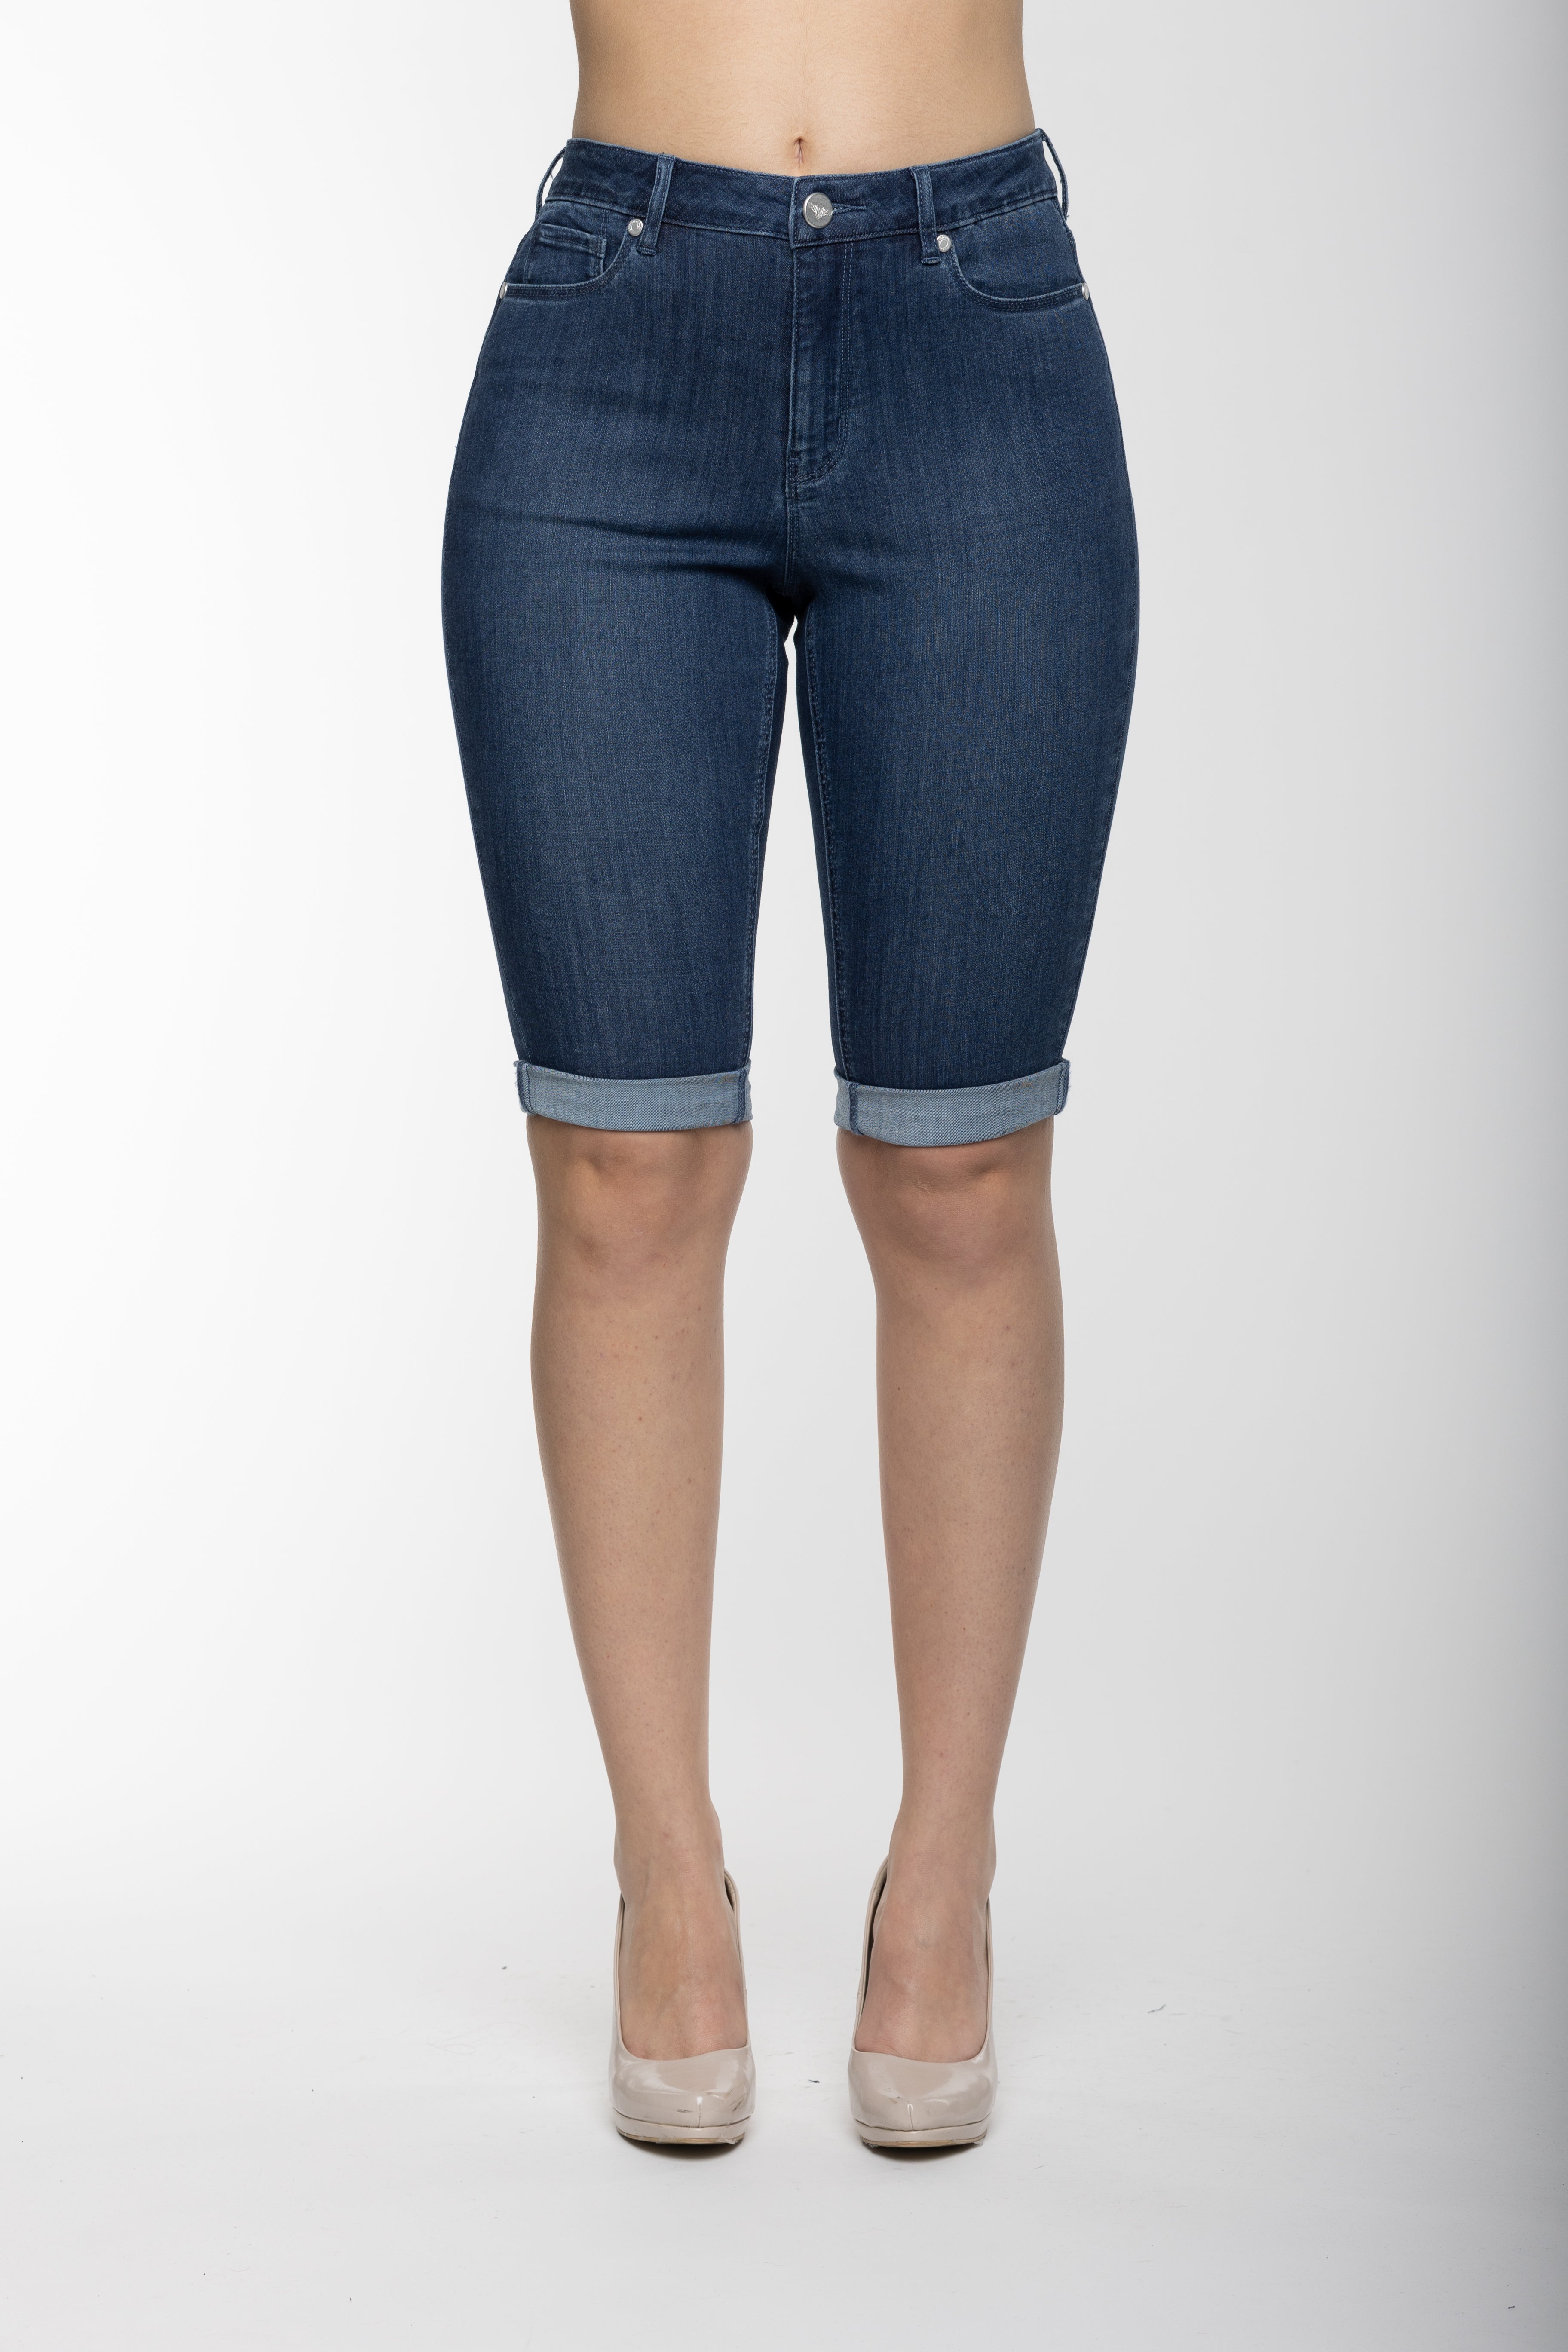 Carreli Jeans® | Premium Angela Fit 5 Pocket Bermuda in Stone Wash